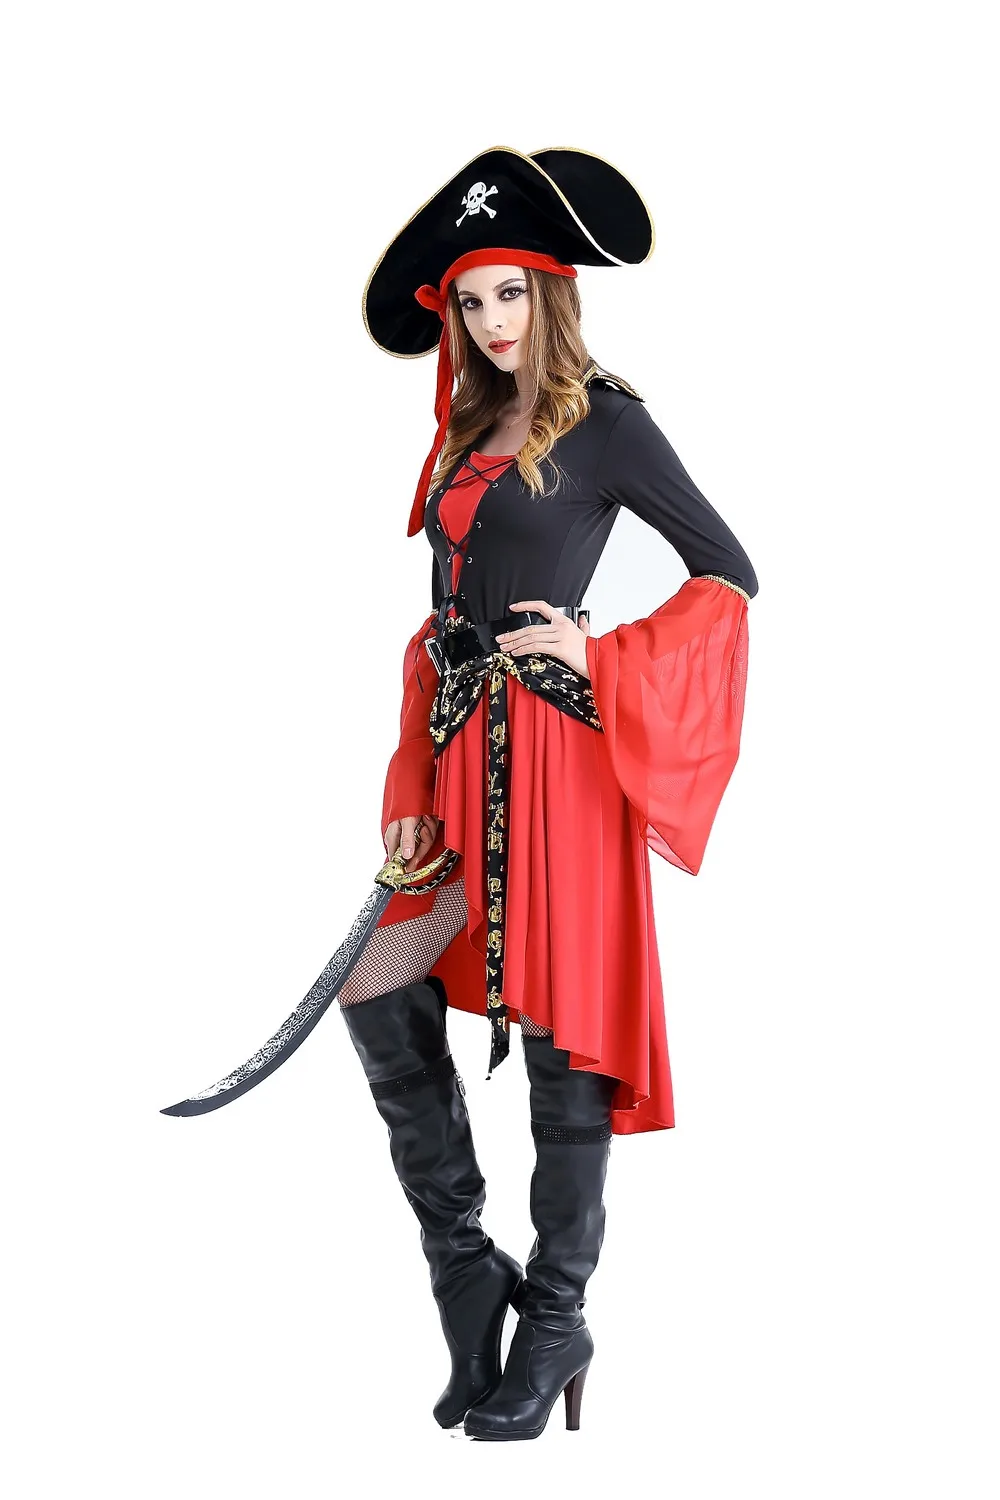 1set/veliko Pirate Kostumi Uspešnosti Seksi Odraslih Halloween Kostum Obleko ženska poliester pirat noša